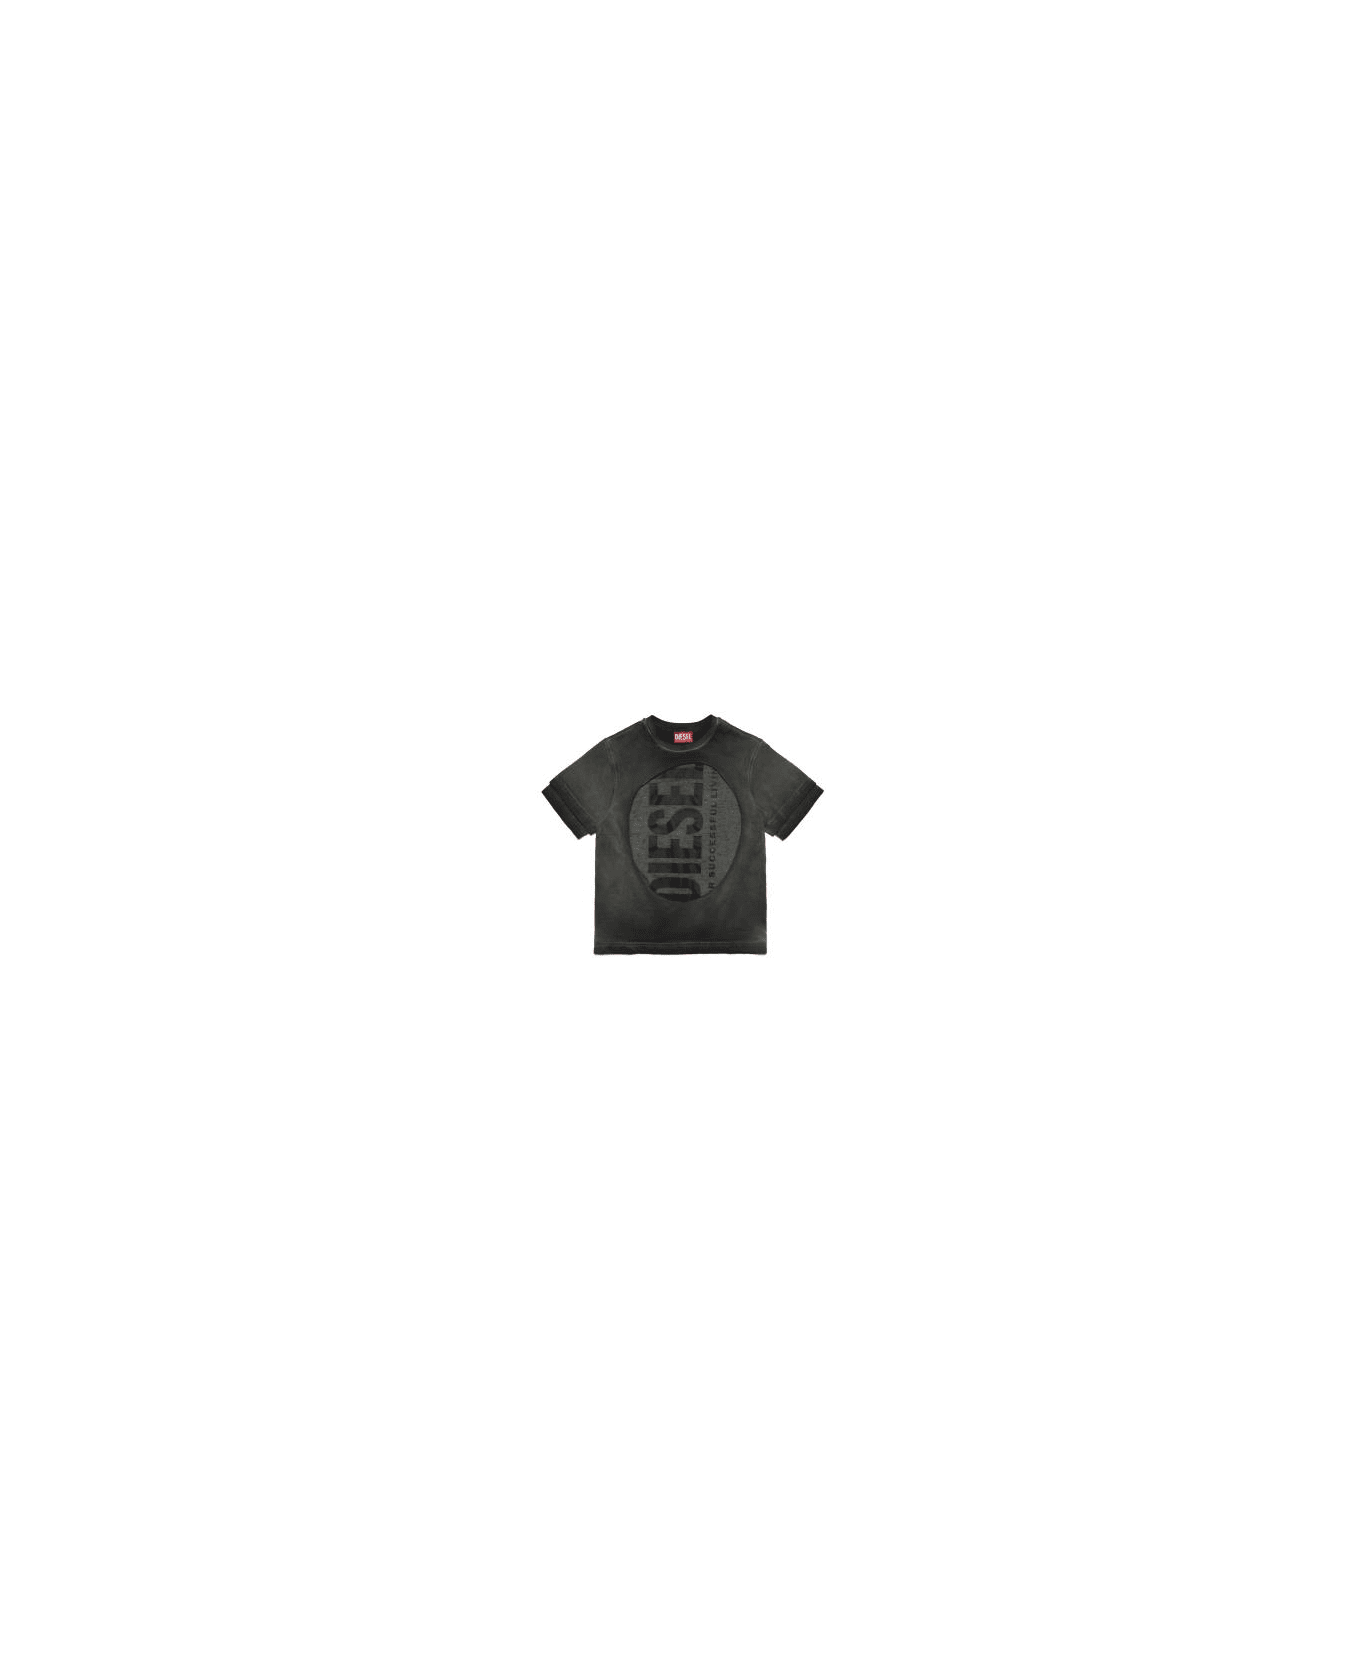 Diesel T-shirt Con Logo - Black